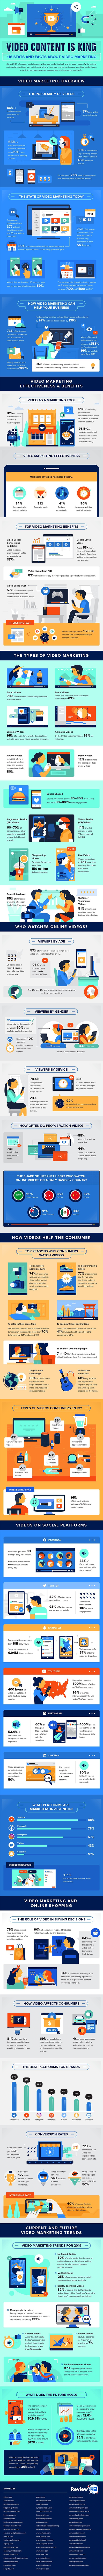 Video-Marketing-Statistics (1)